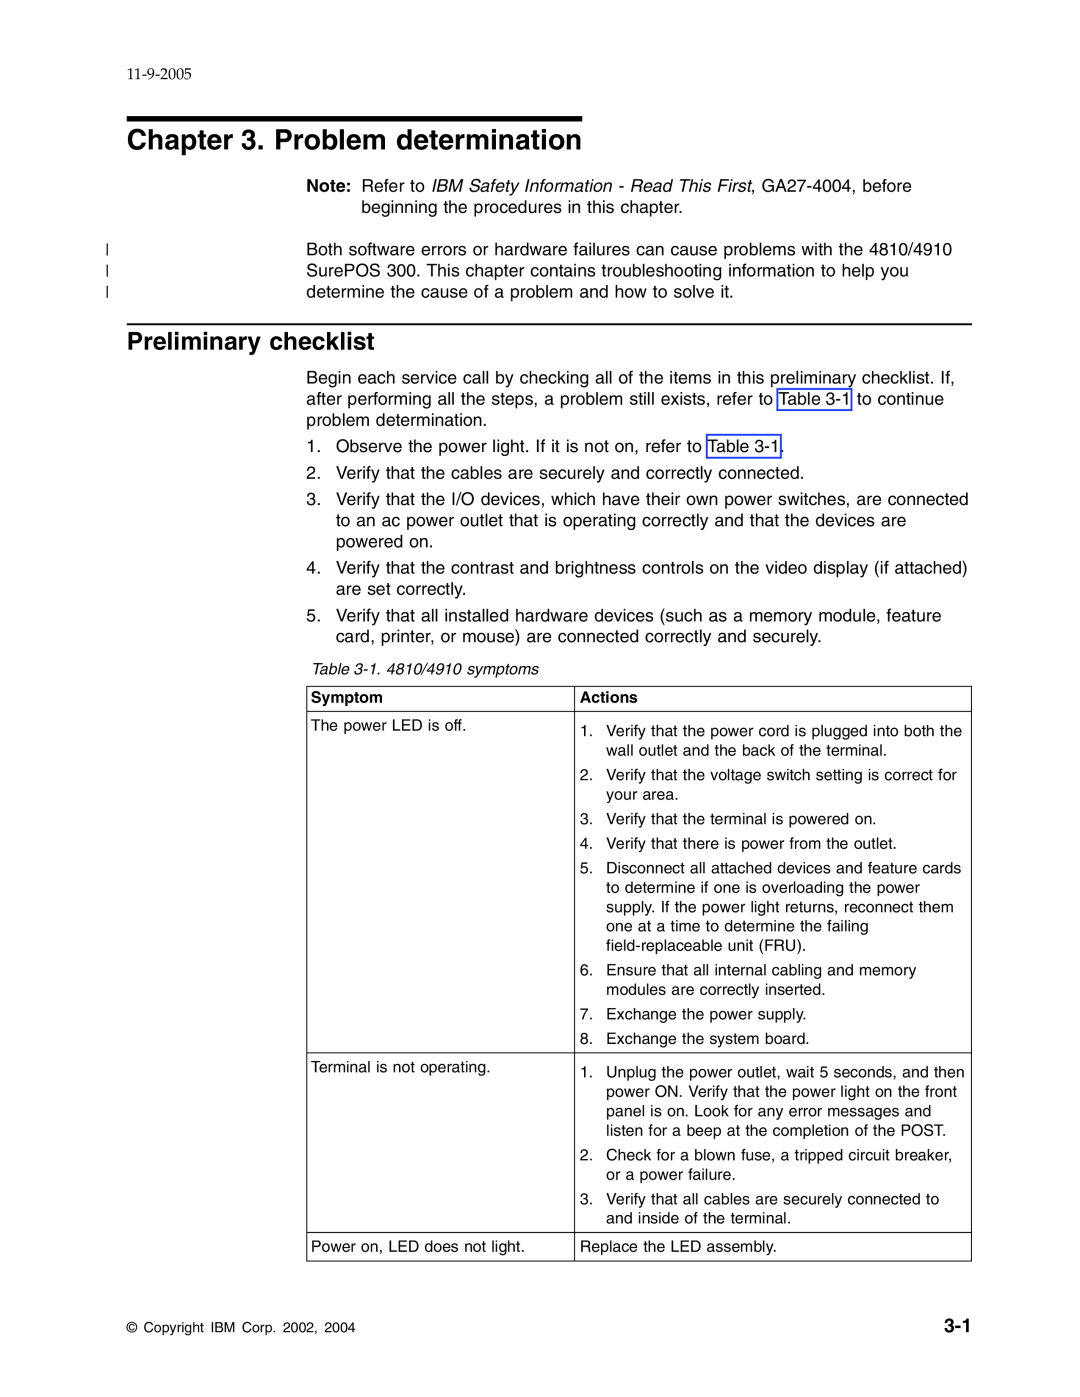 IBM W2H, 31x, 32x manual Problem determination, Preliminary checklist 